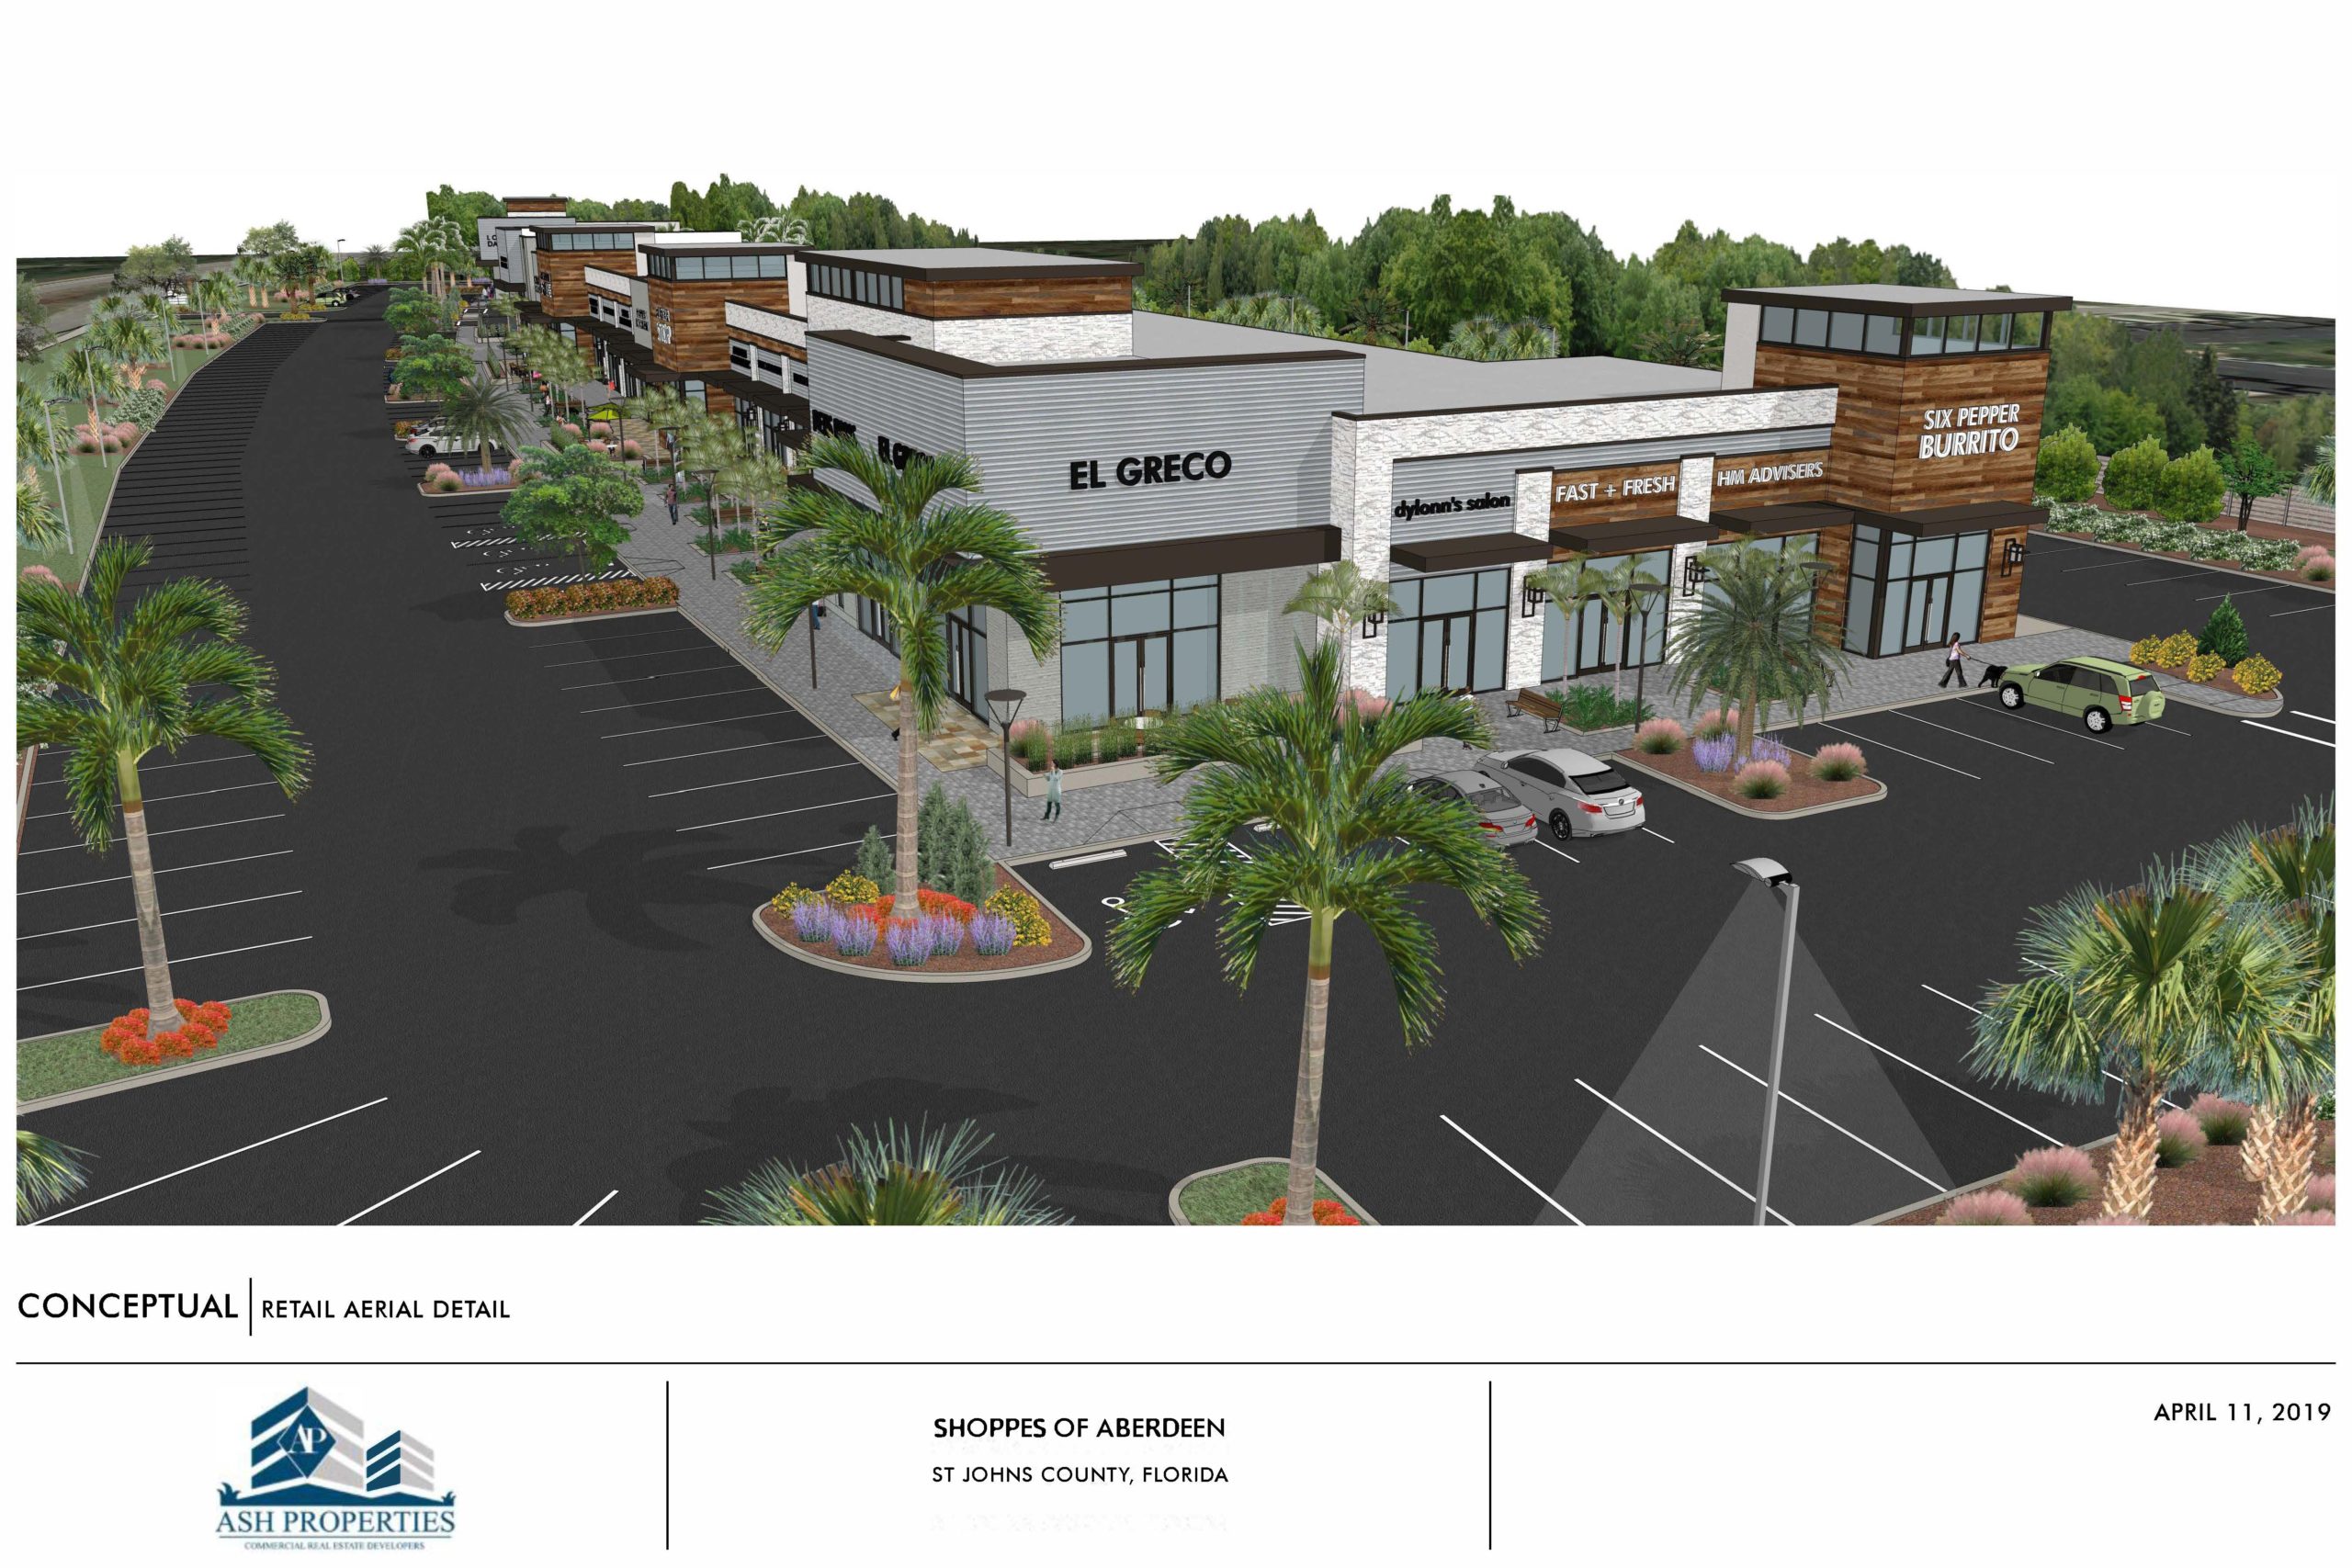 A conceptual rendering of a retail shopping center.